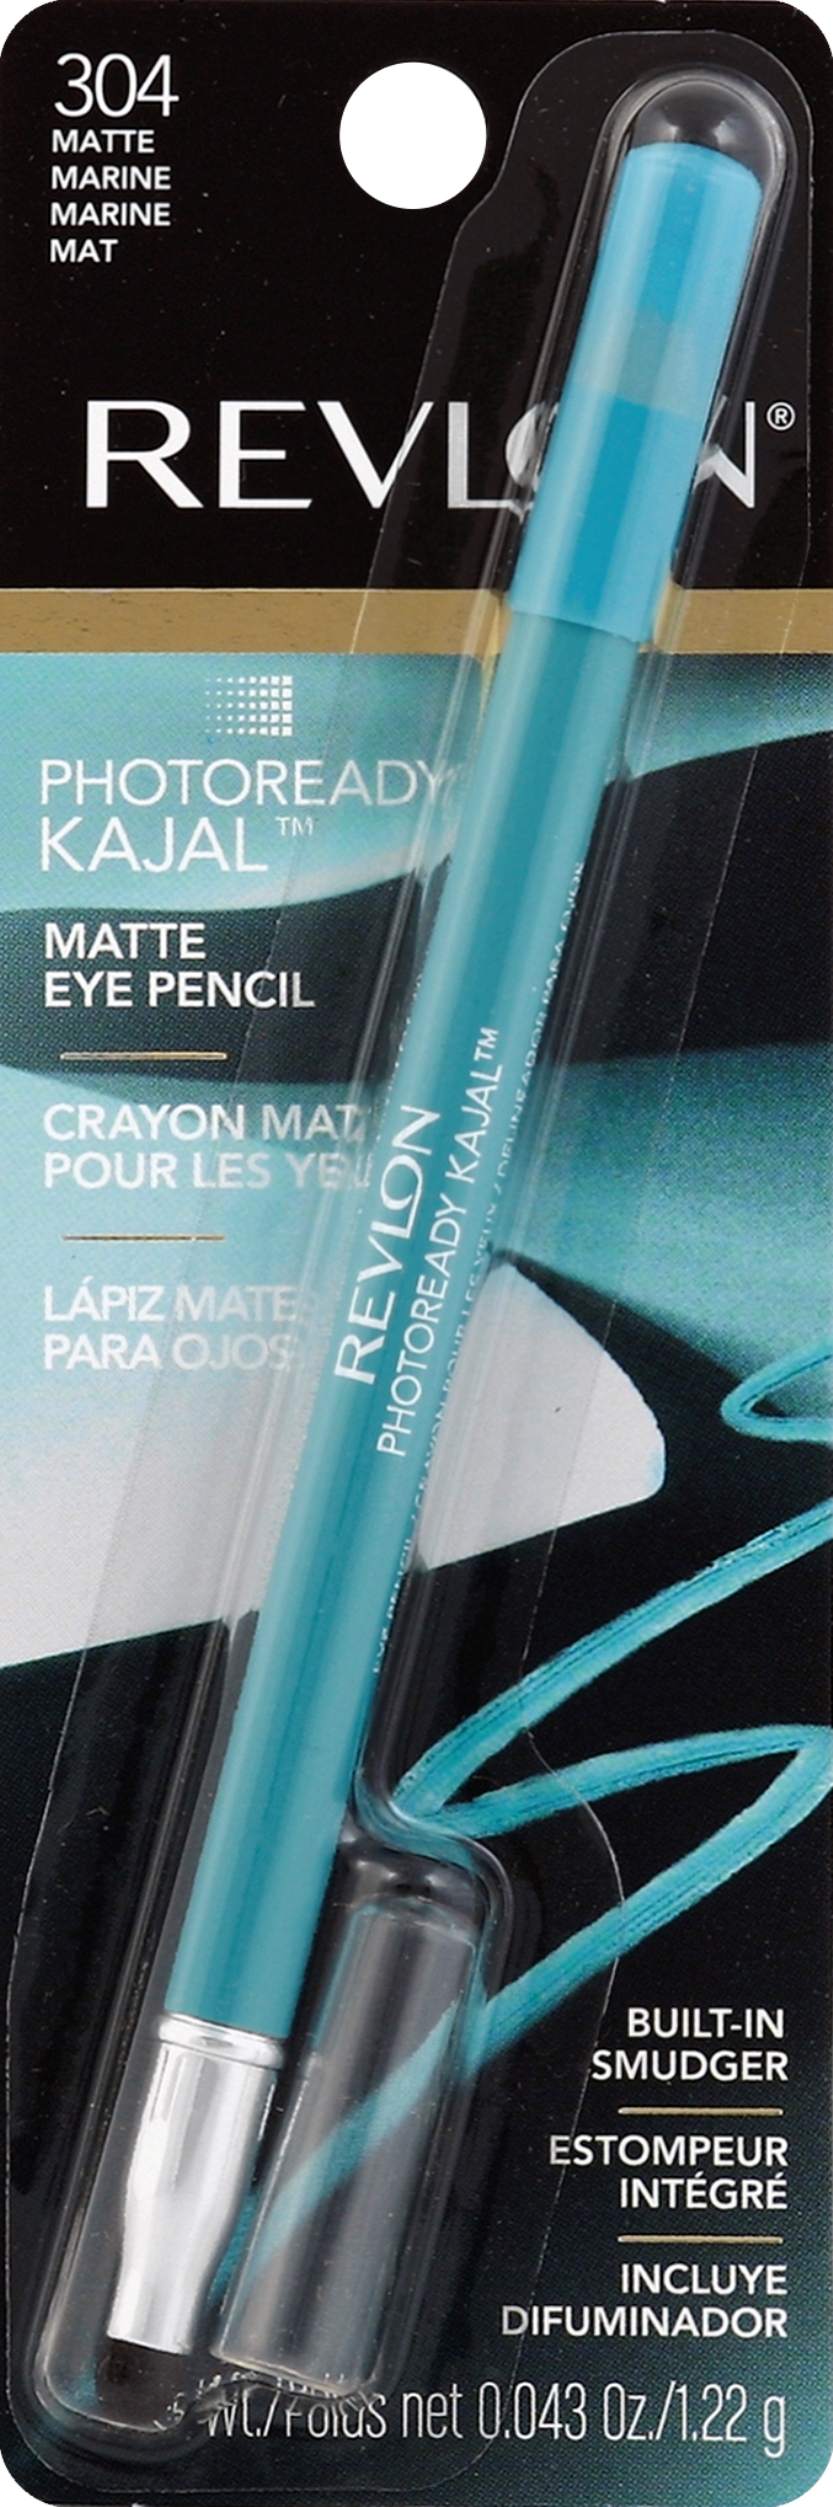 Revlon Photoready Matte Kajal Eye Pencil - 330 Marine